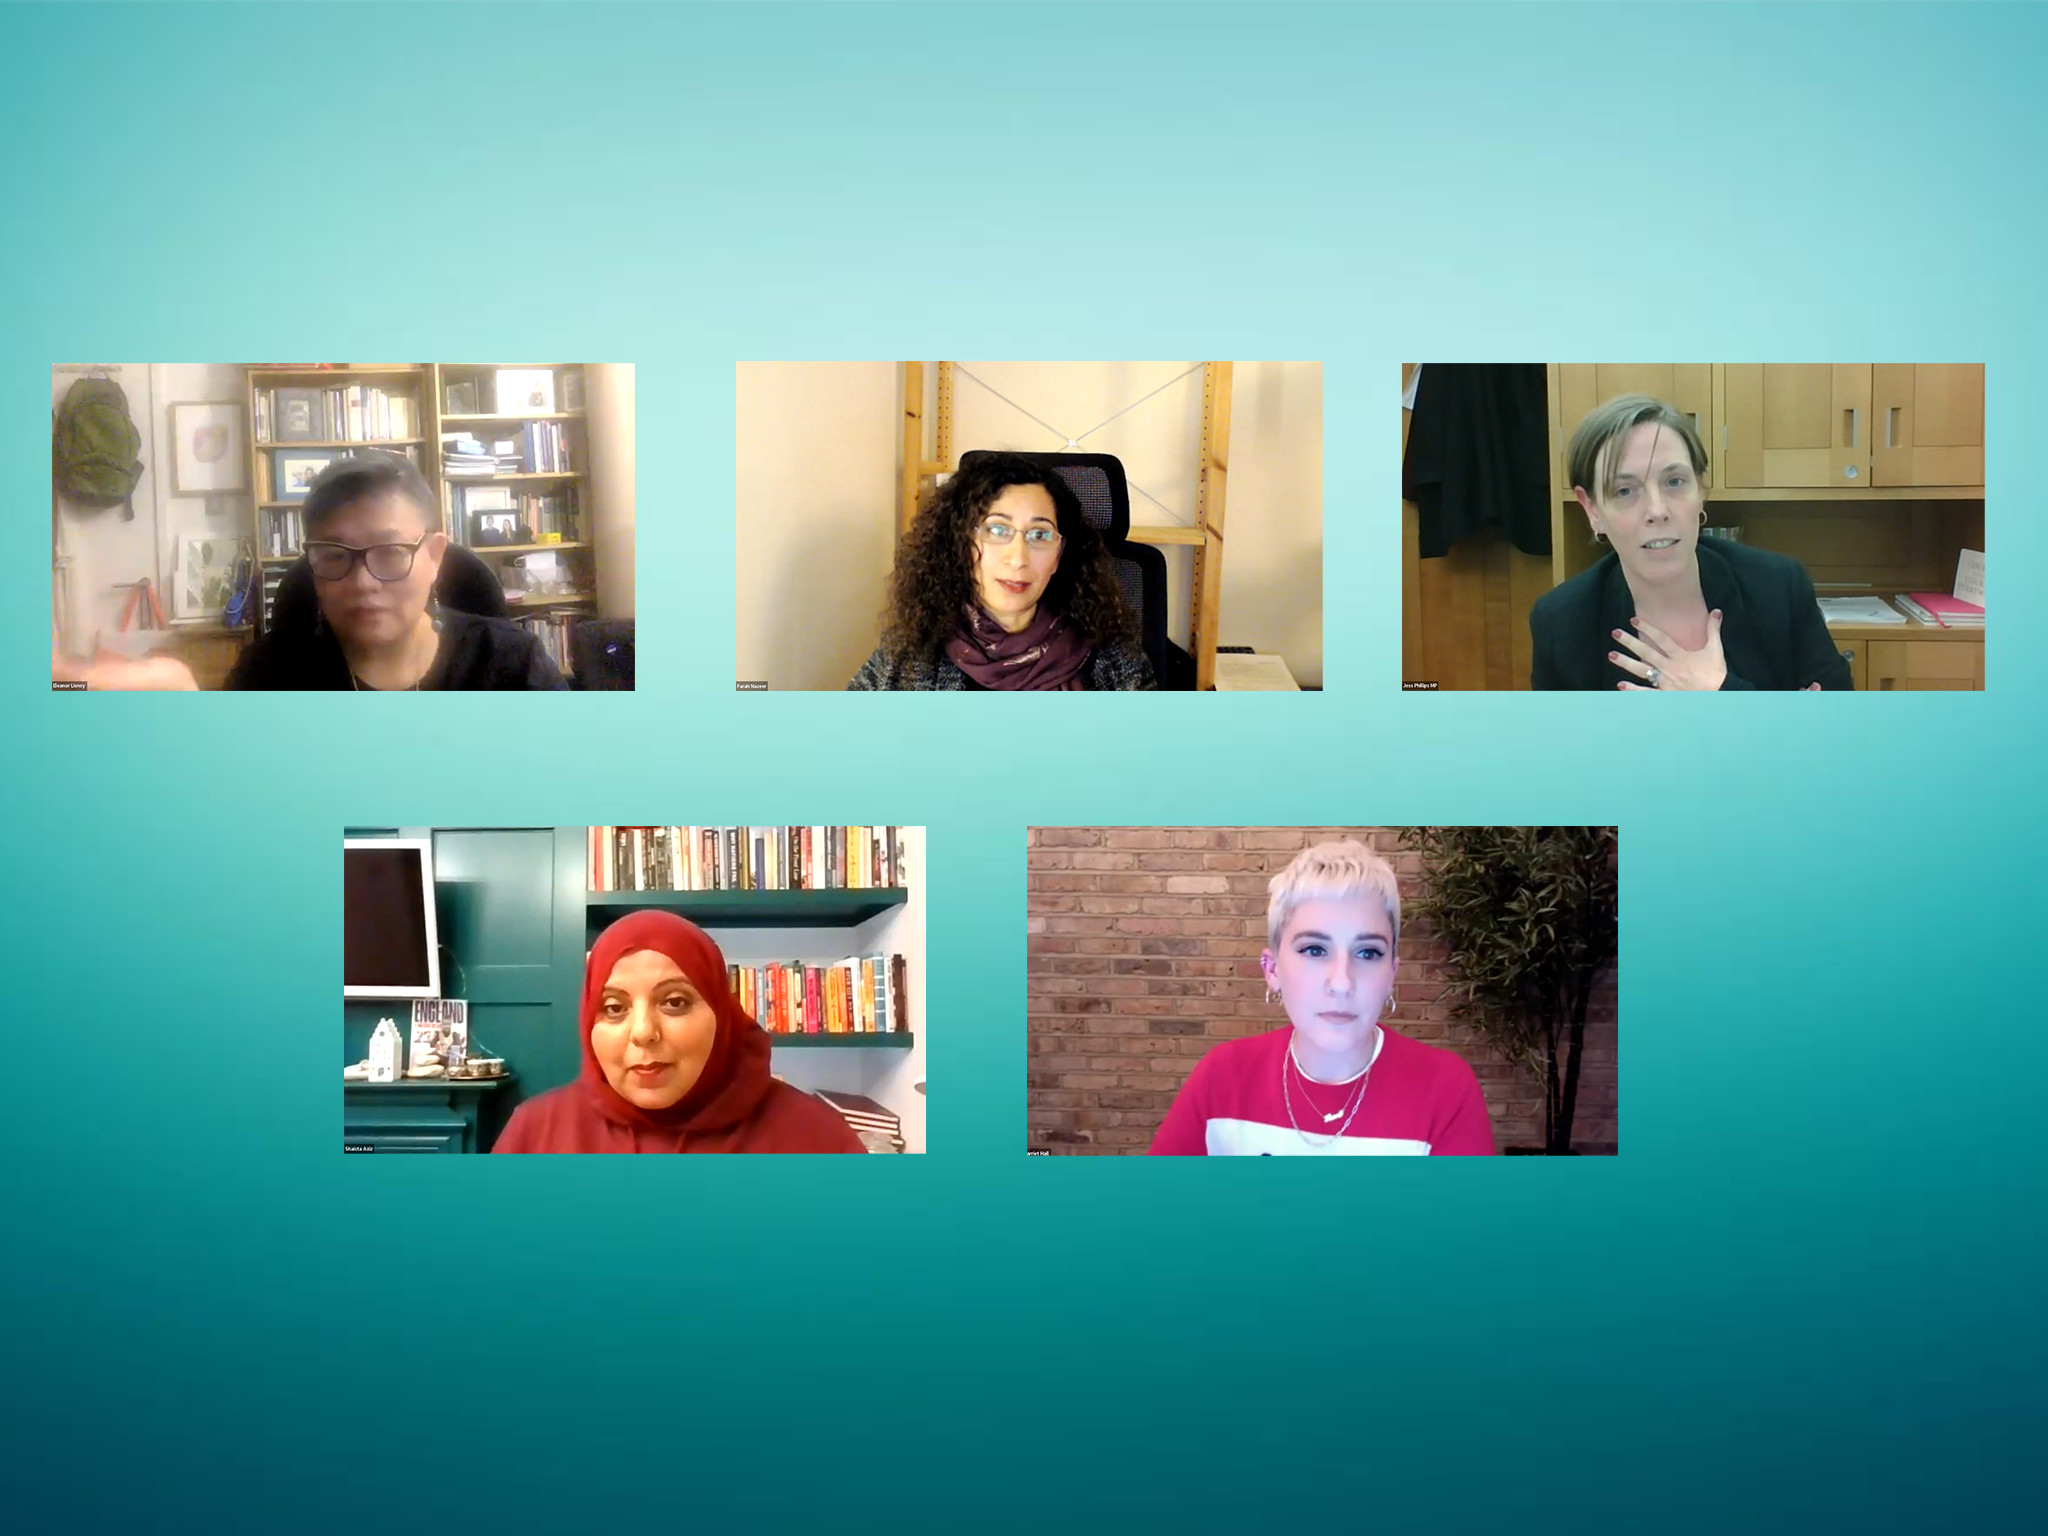 Violence against women panel discussion: Farah Nazeer, Eleanor Lisney, Jess Phillips, Shaista Aziz and host Harriet Hall